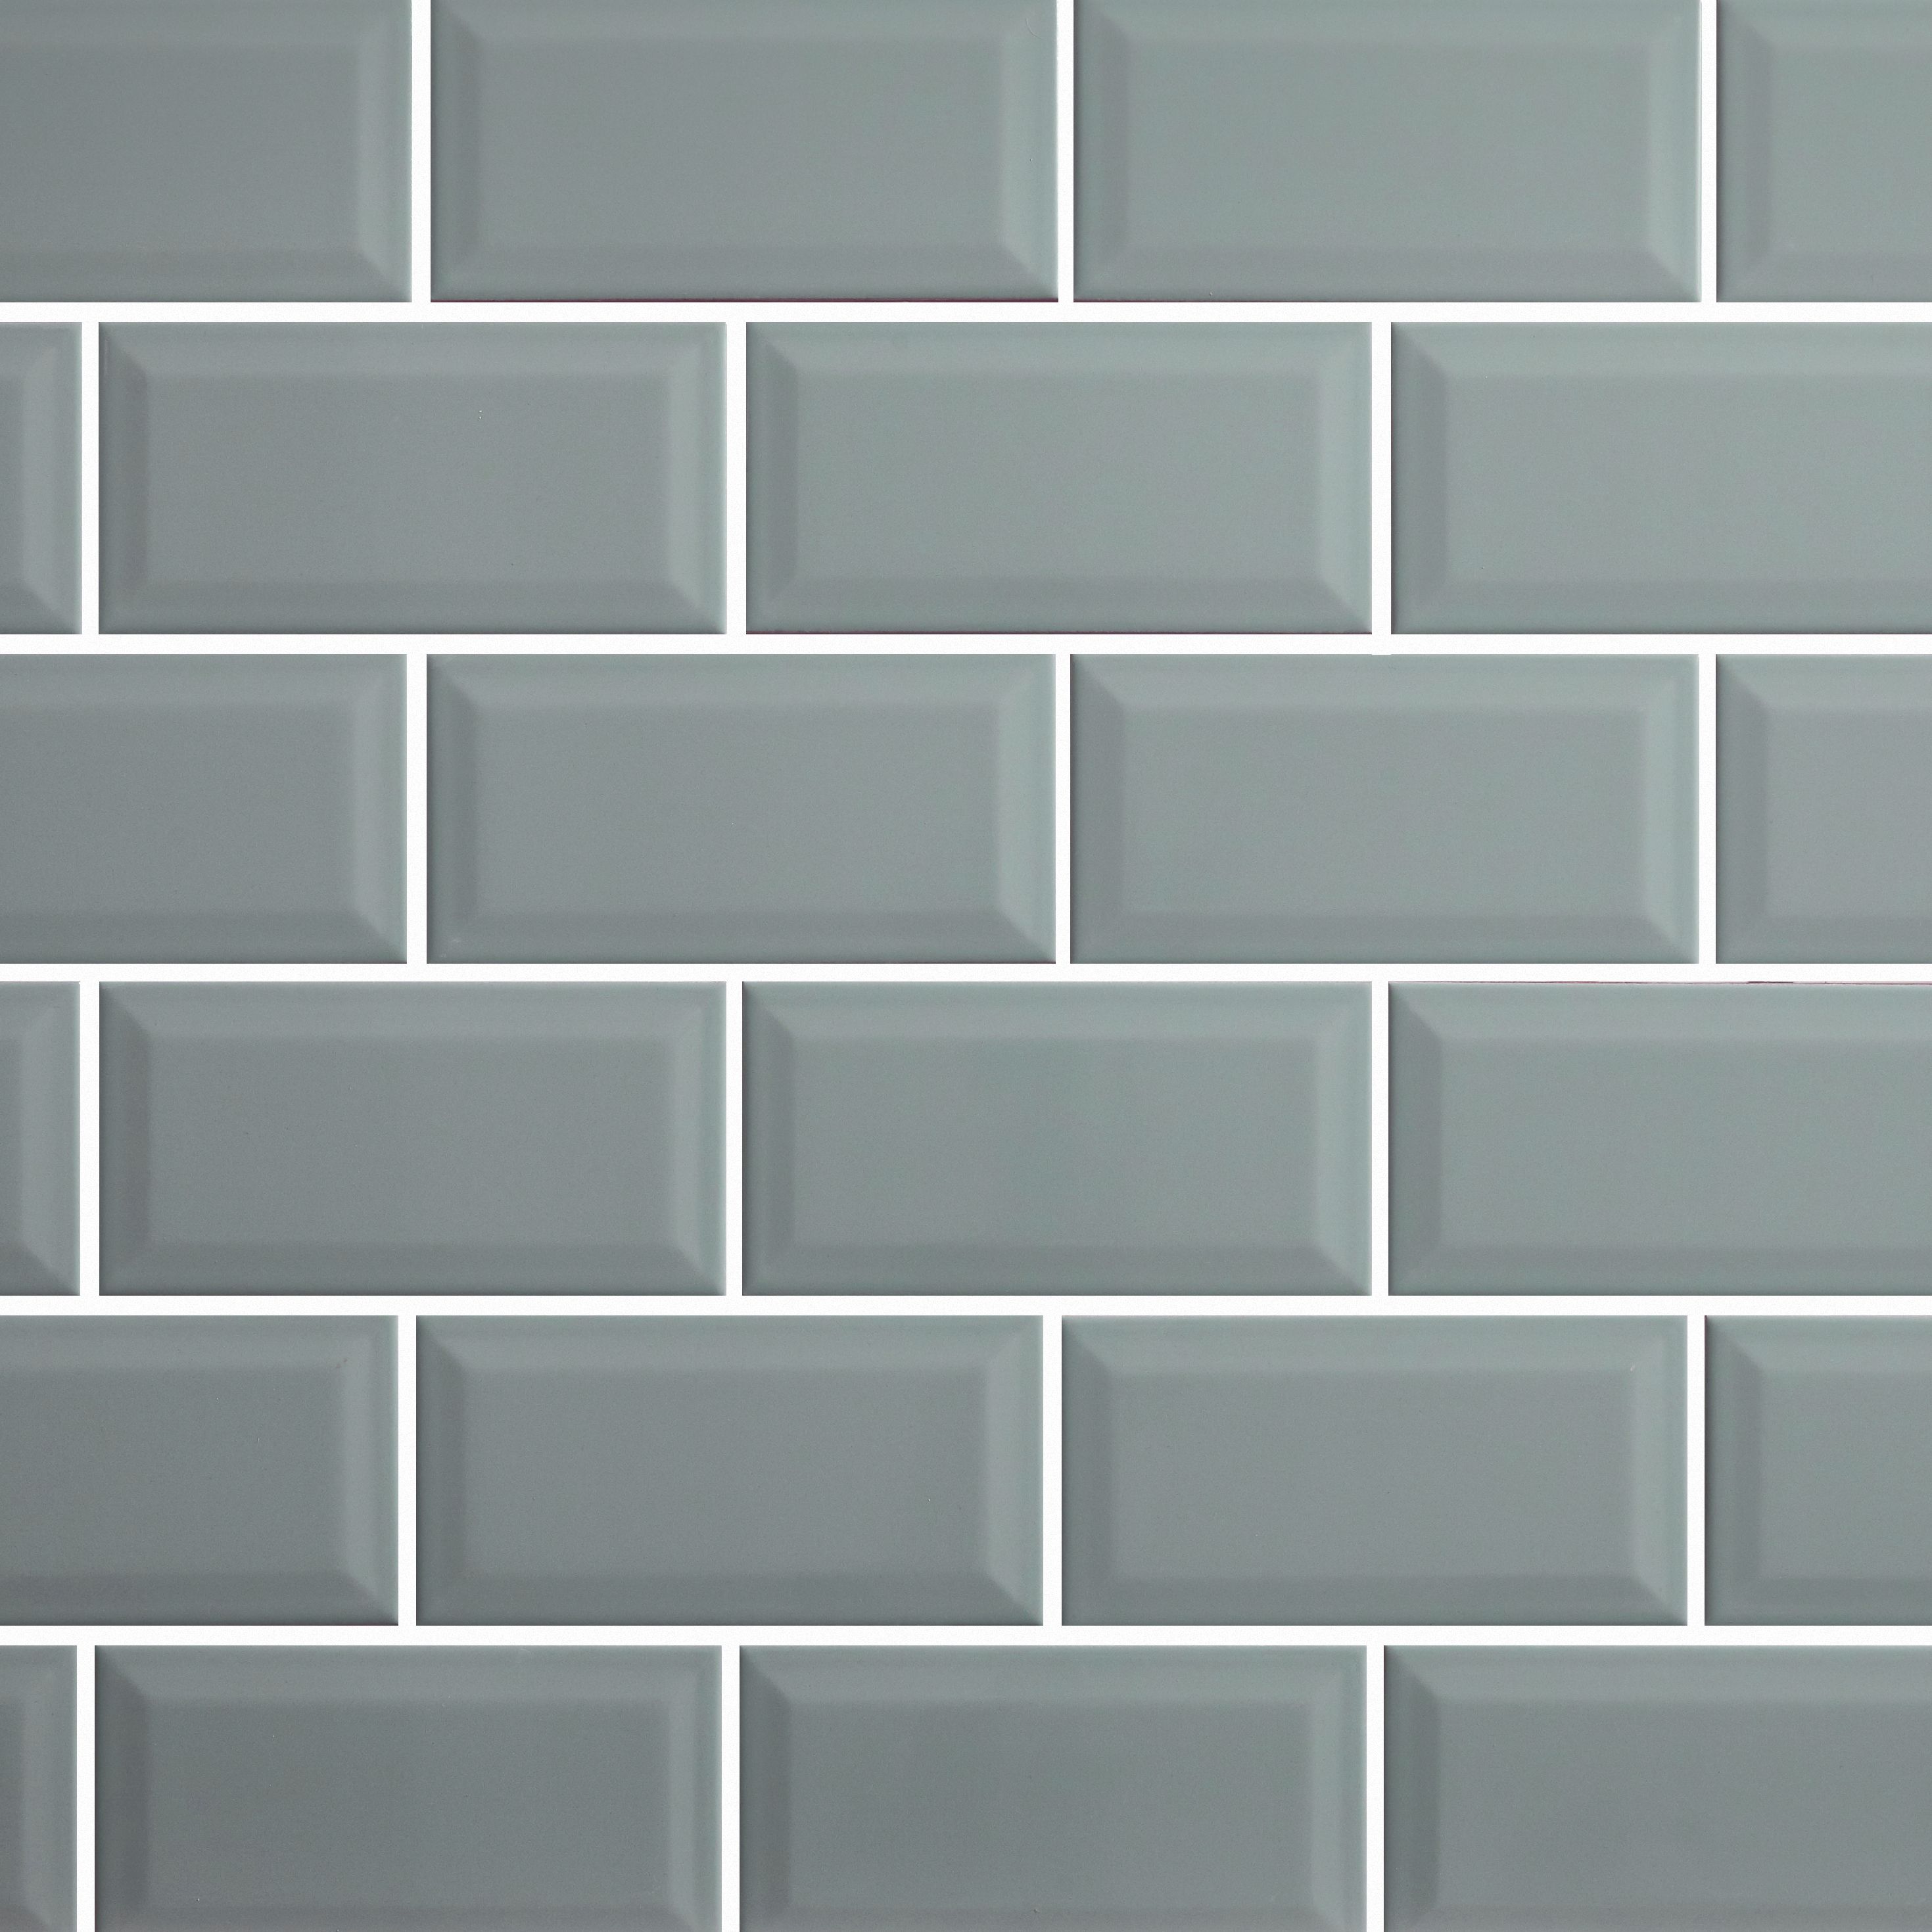 Trentie Green Gloss Metro Ceramic Wall tile, Pack of 40, (L)200mm (W)100mm